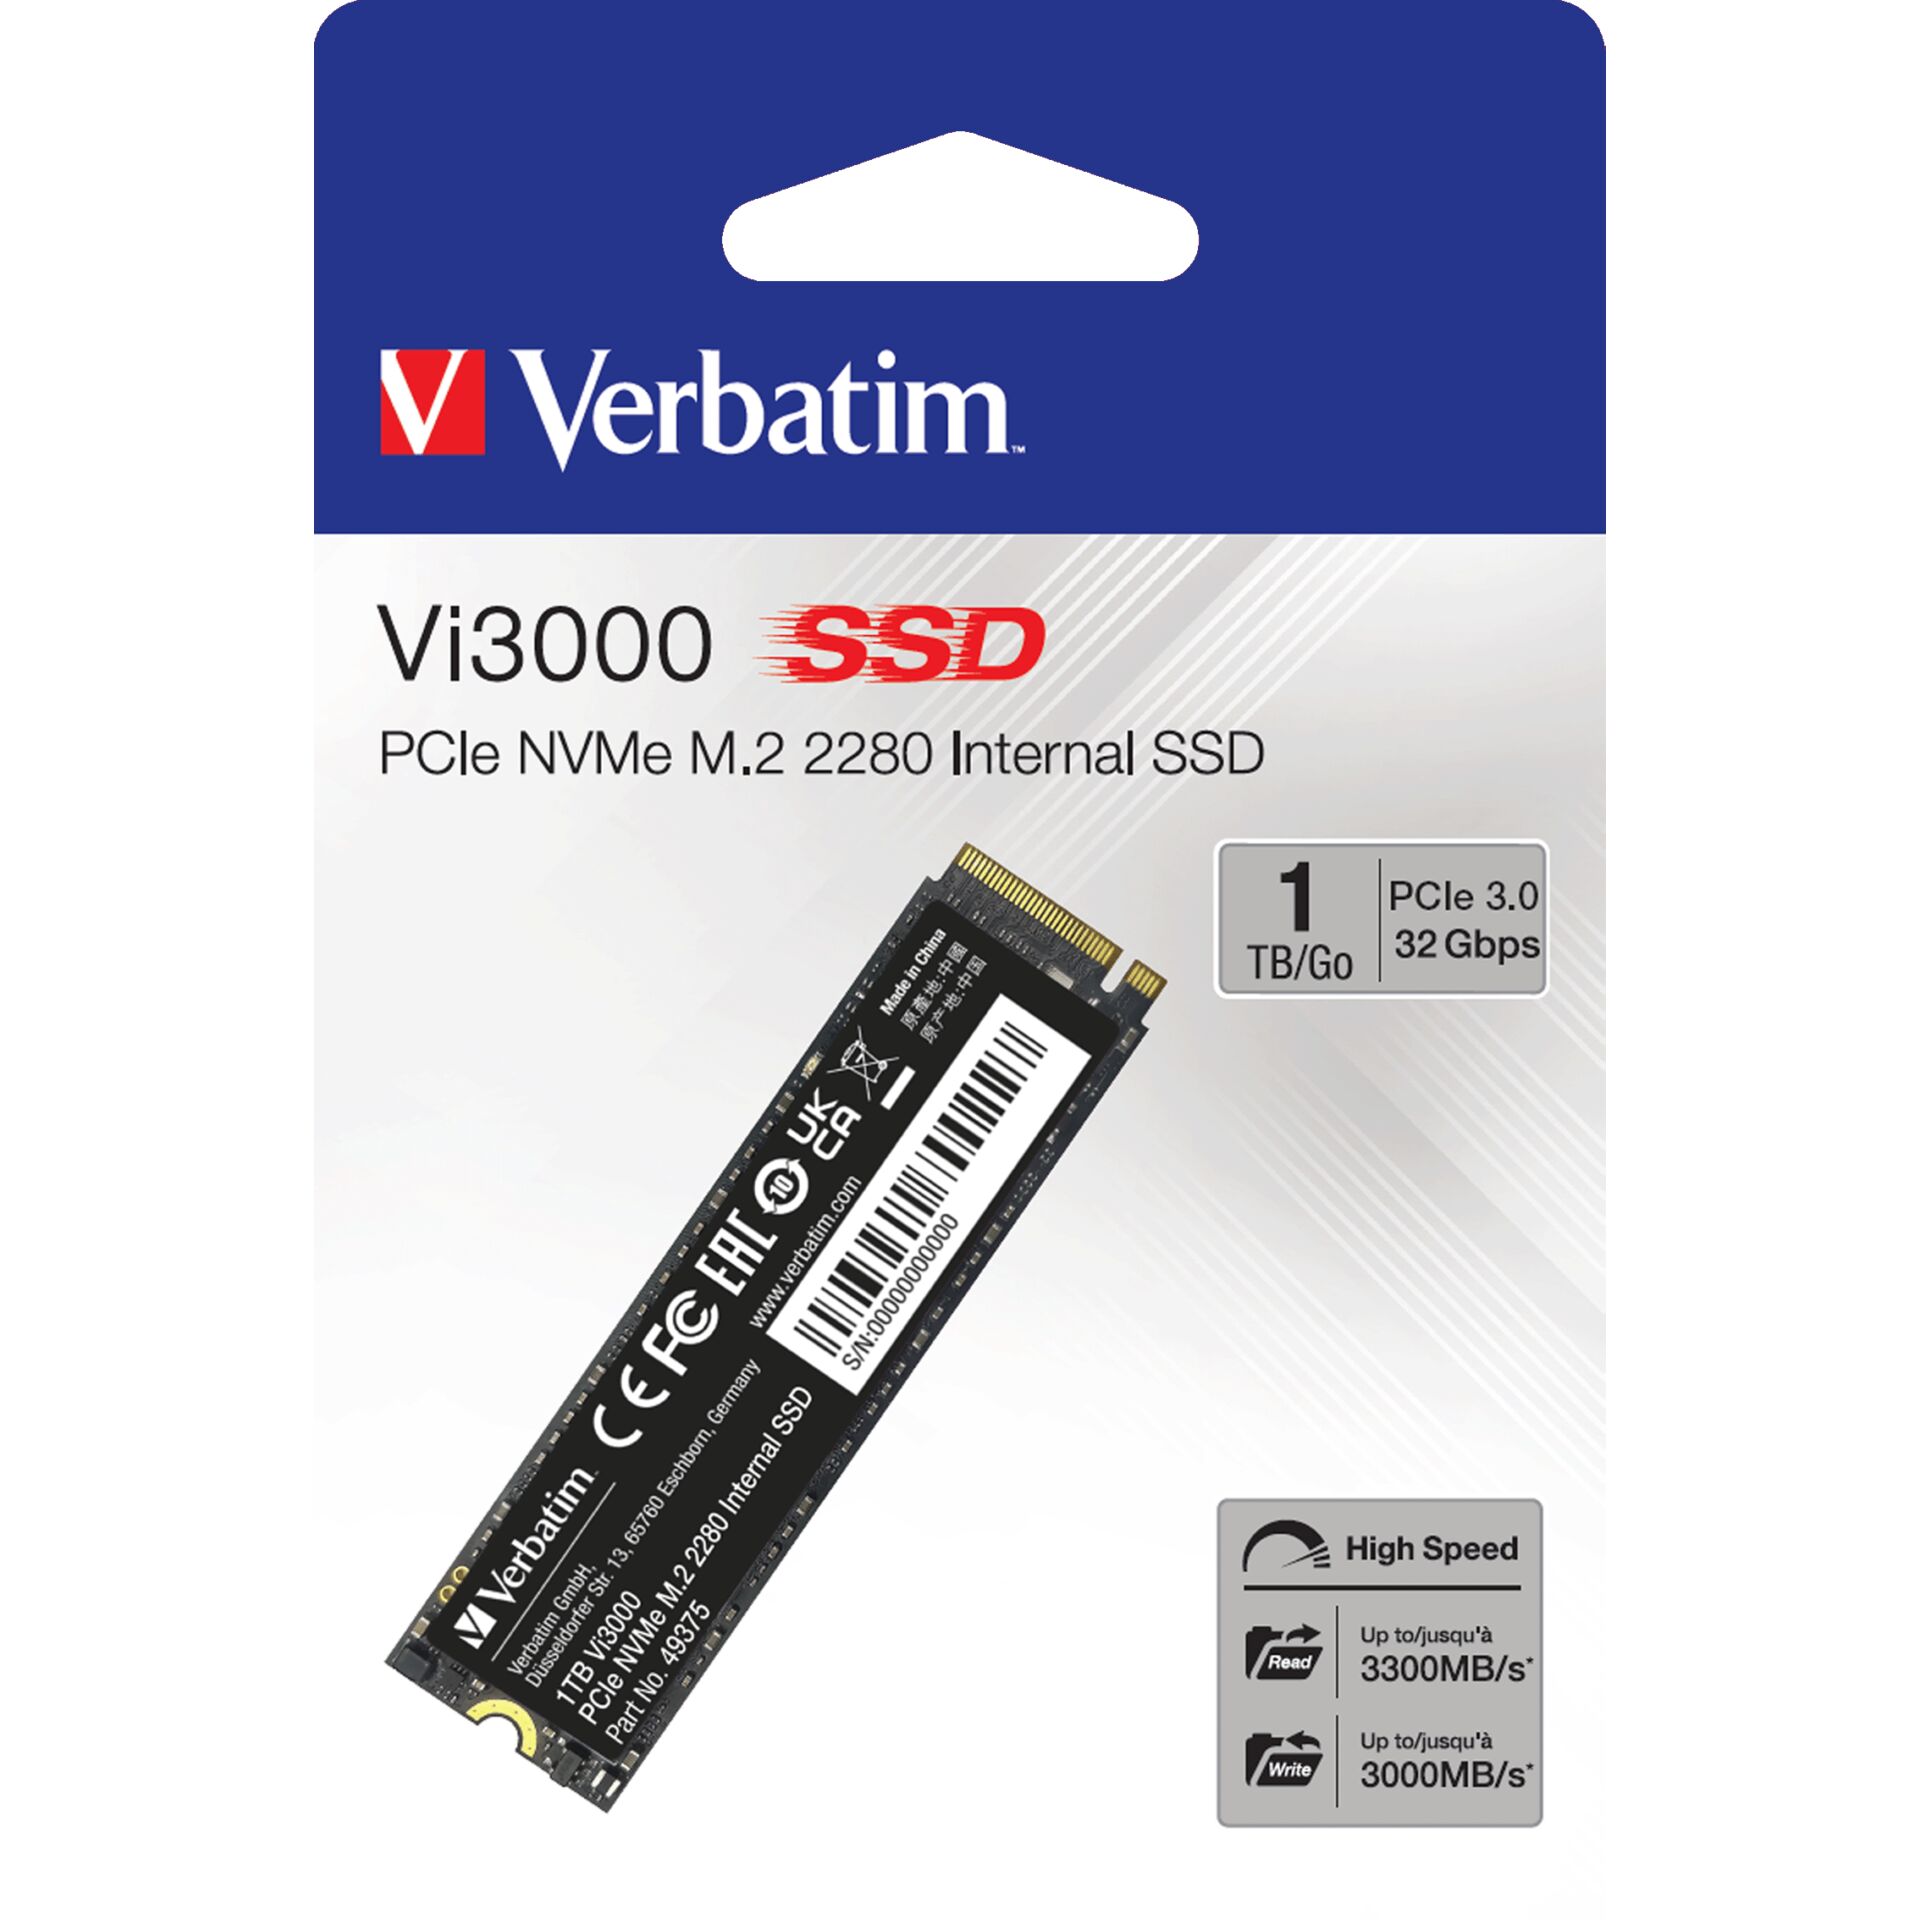 Verbatim Vi3000 PCle NVMe M.2 SSD 1TB                    493